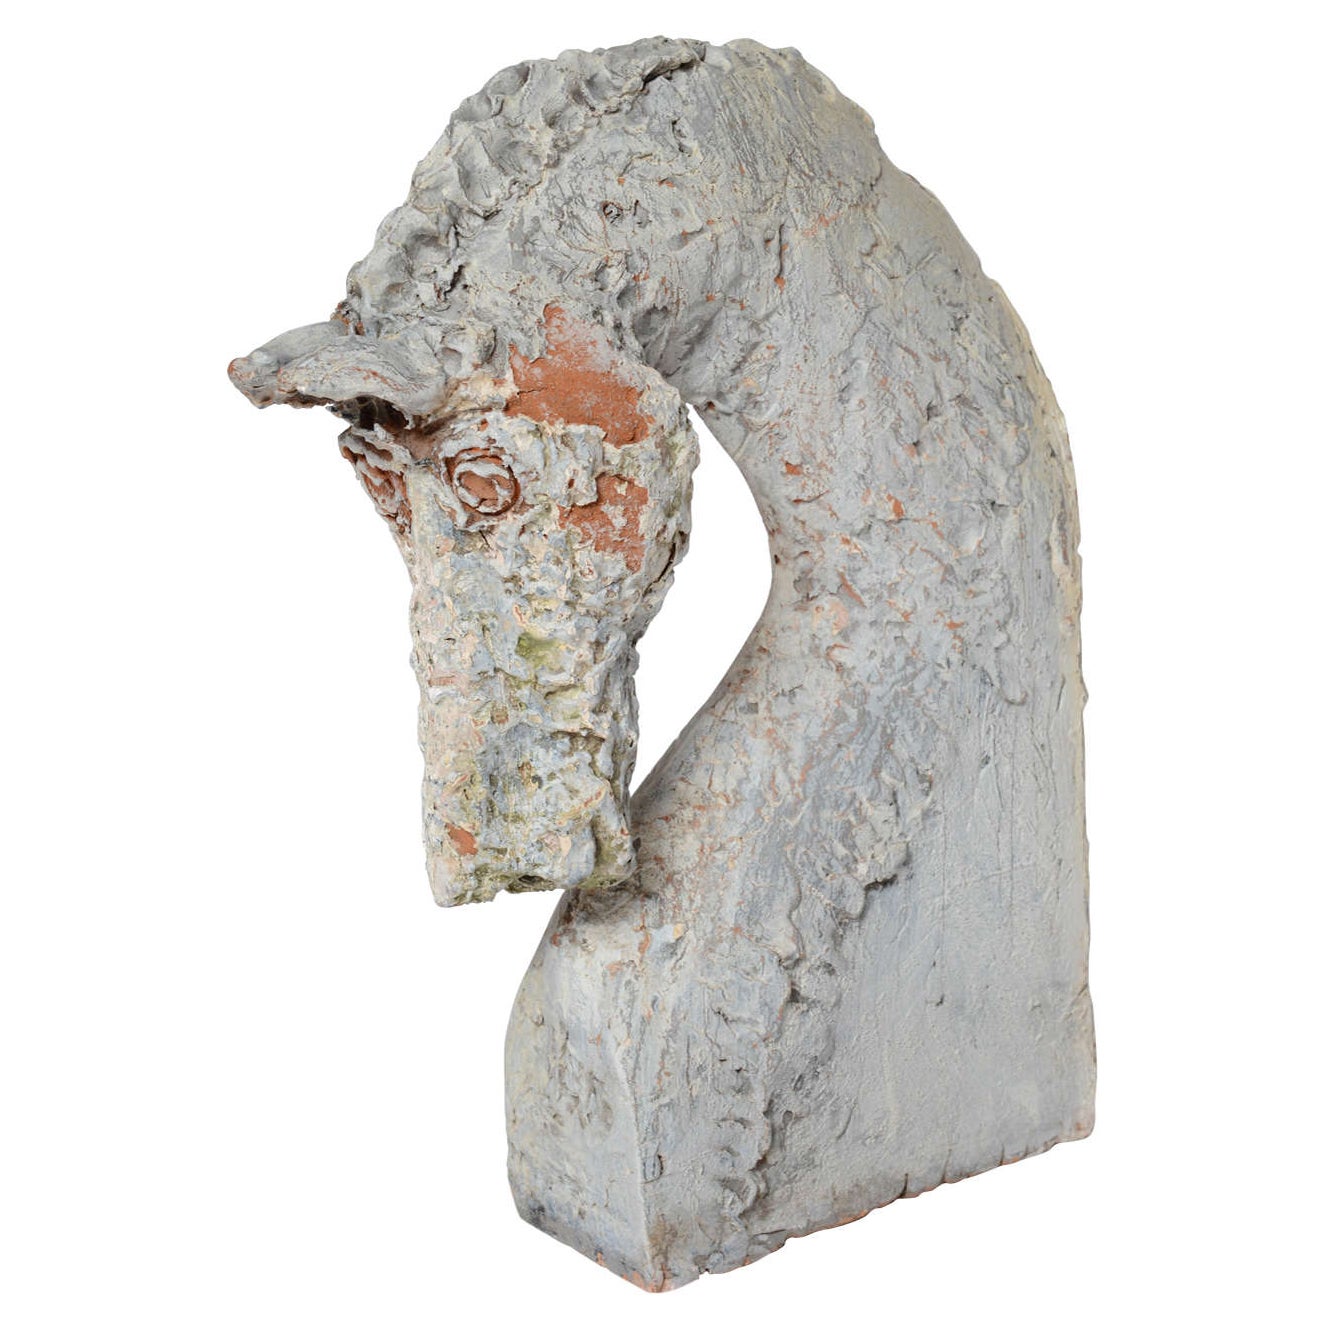 Exceptional Hand-Sculpted Terra Cotta Horse Sculpture